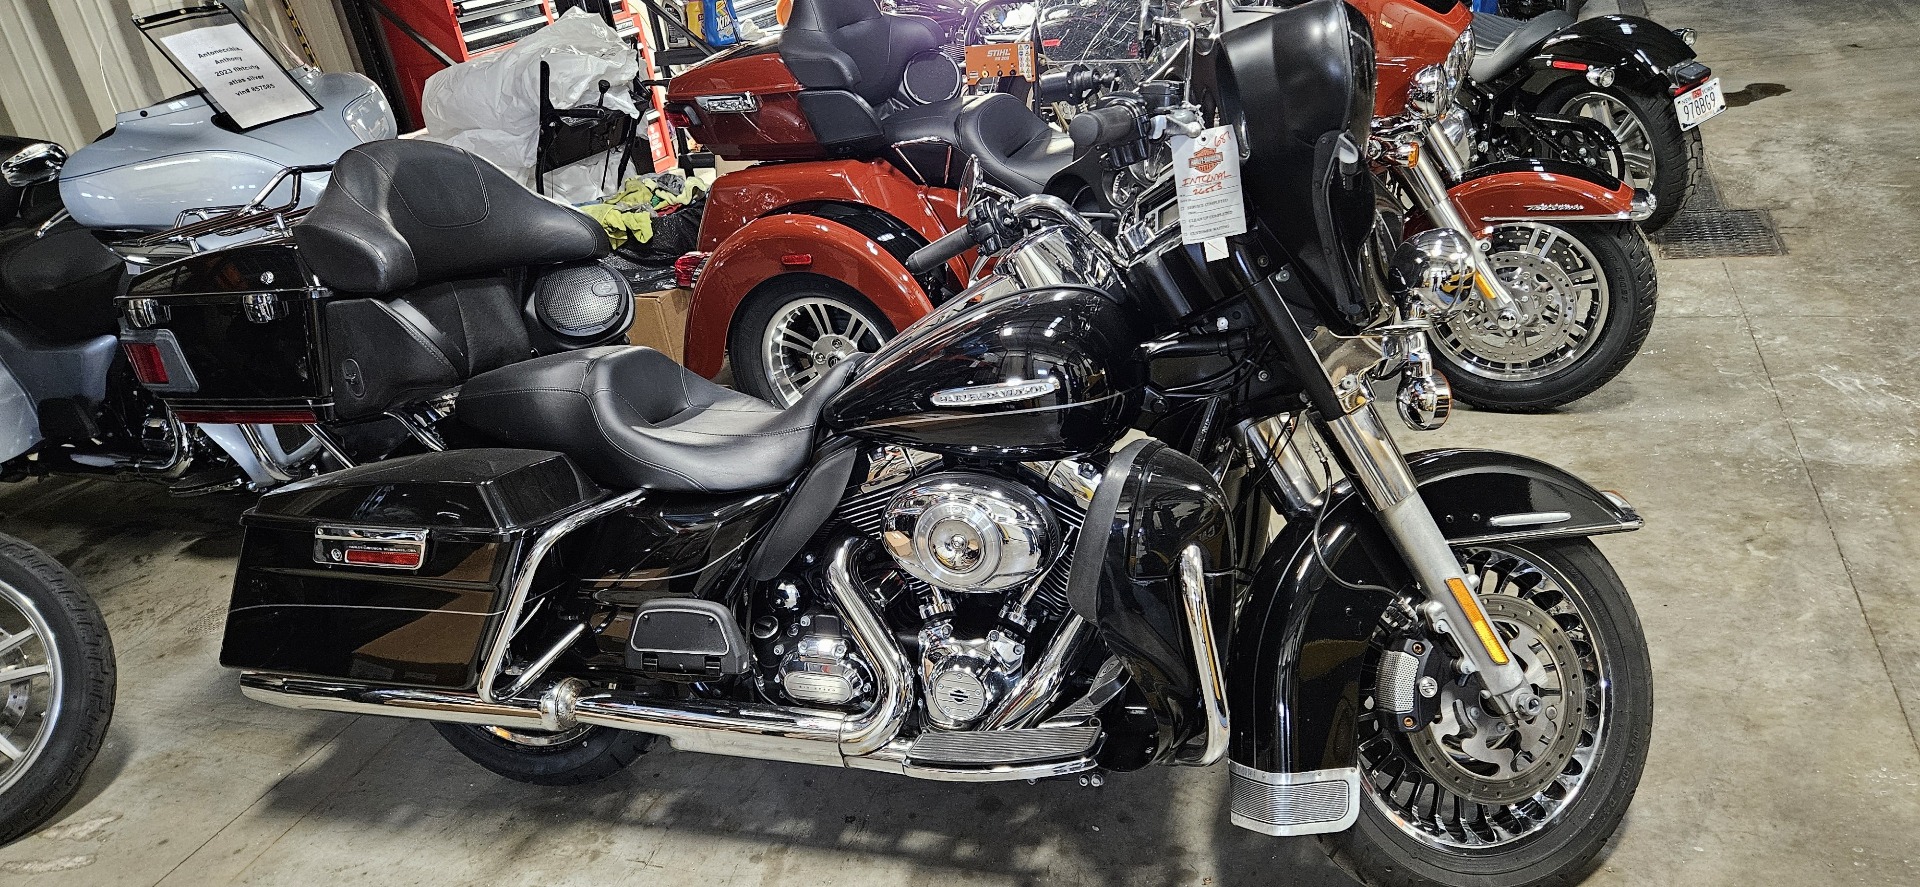 2012 Harley-Davidson Electra Glide® Ultra Limited in Broadalbin, New York - Photo 2